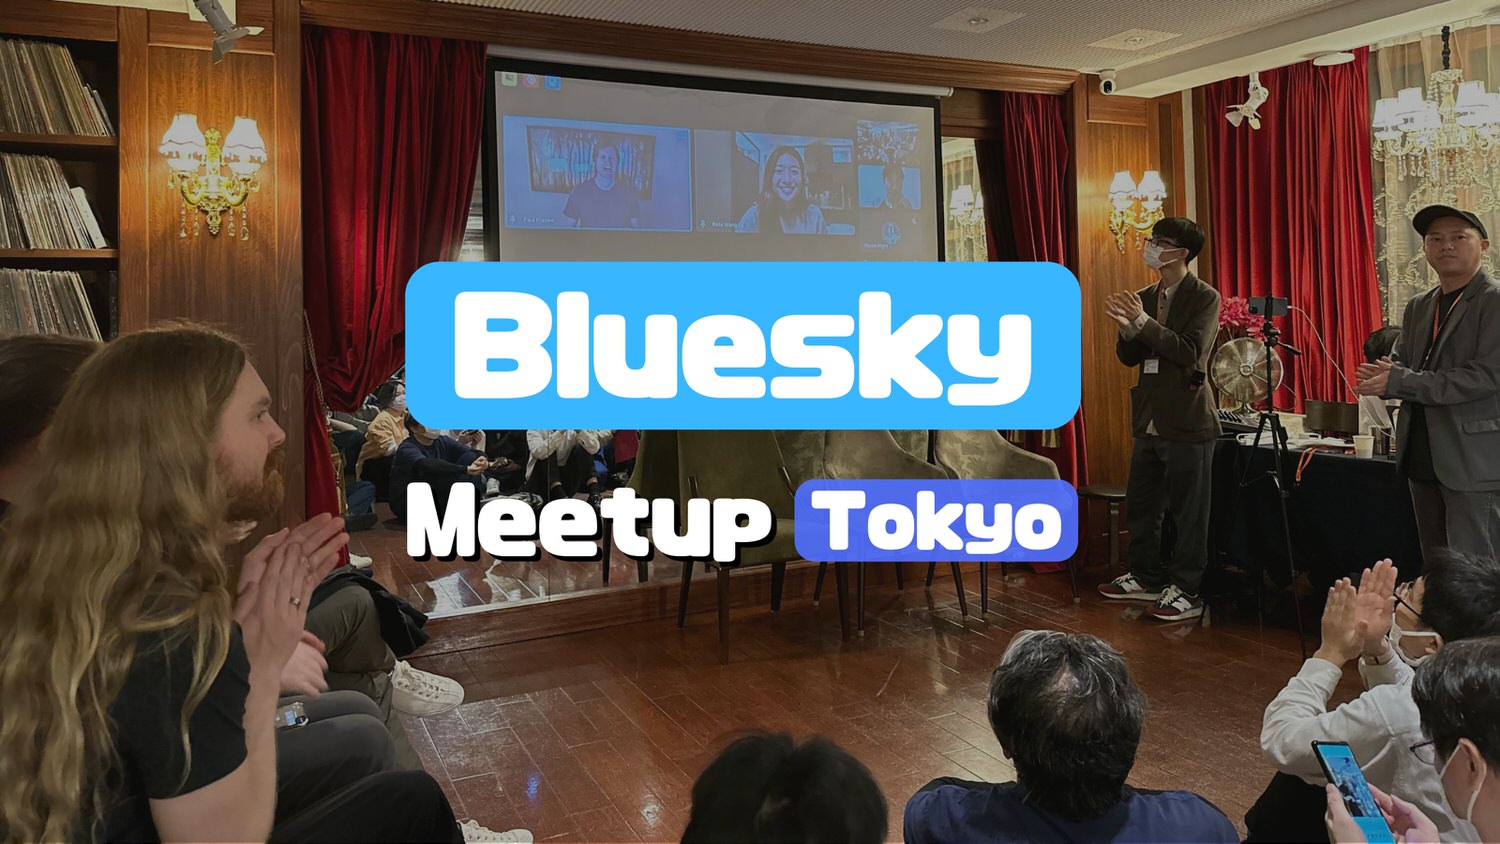 Bluesky meetup tokyo 058 08